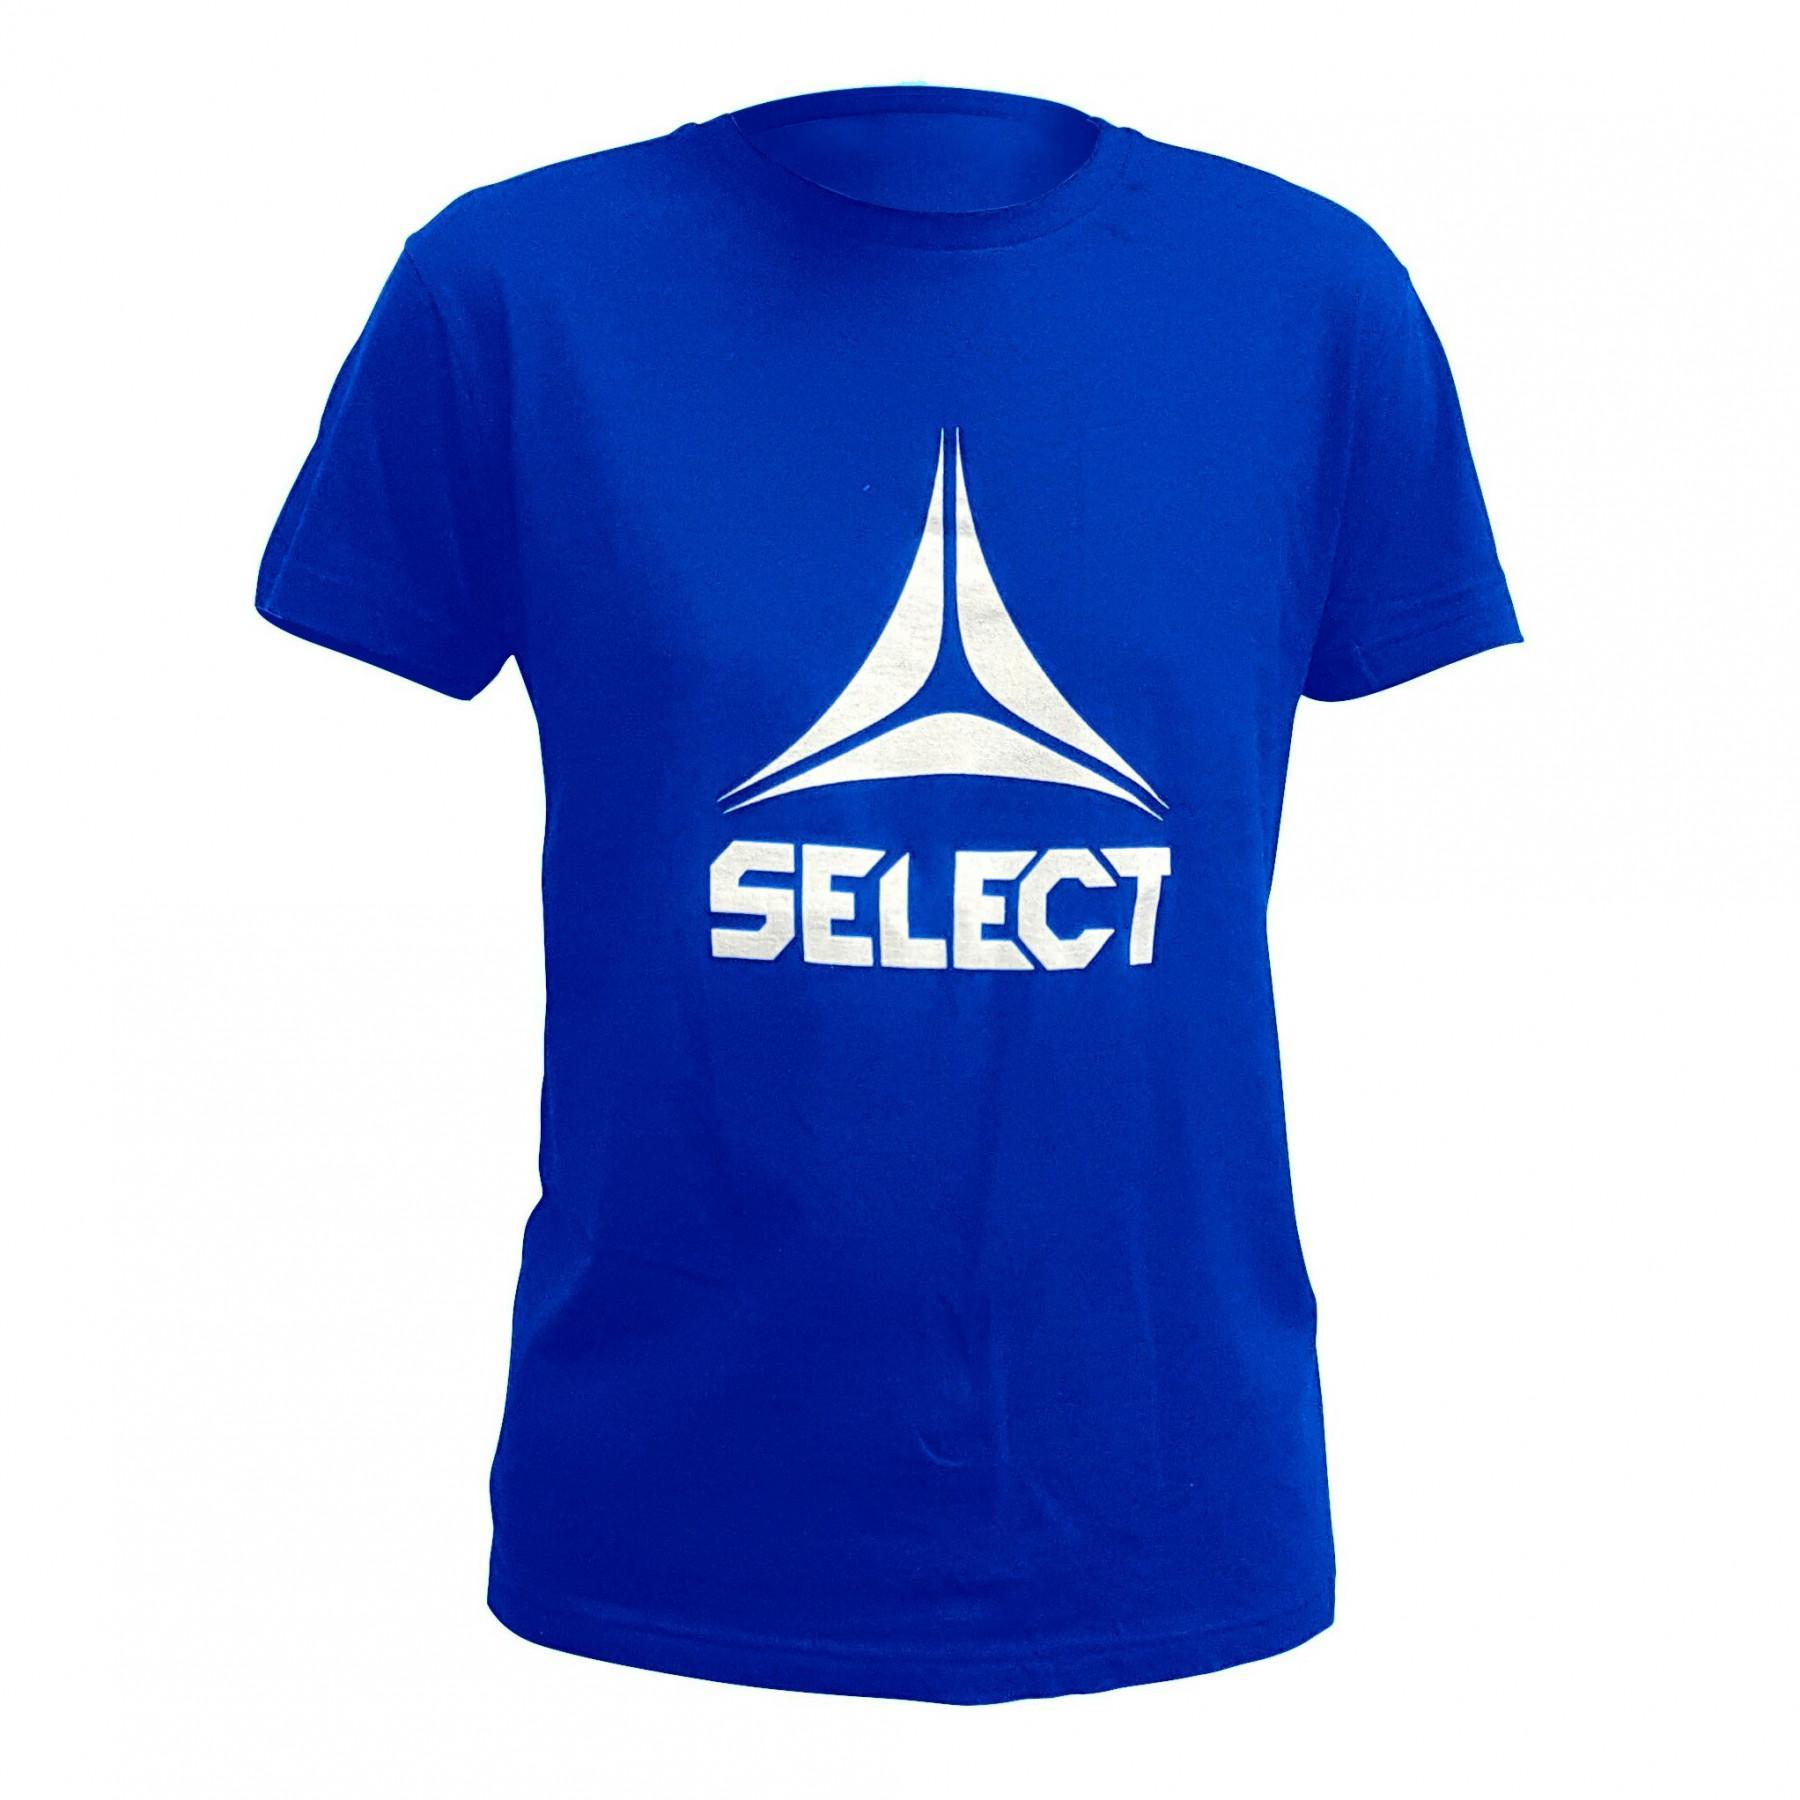 Koszulka podstawowa Select